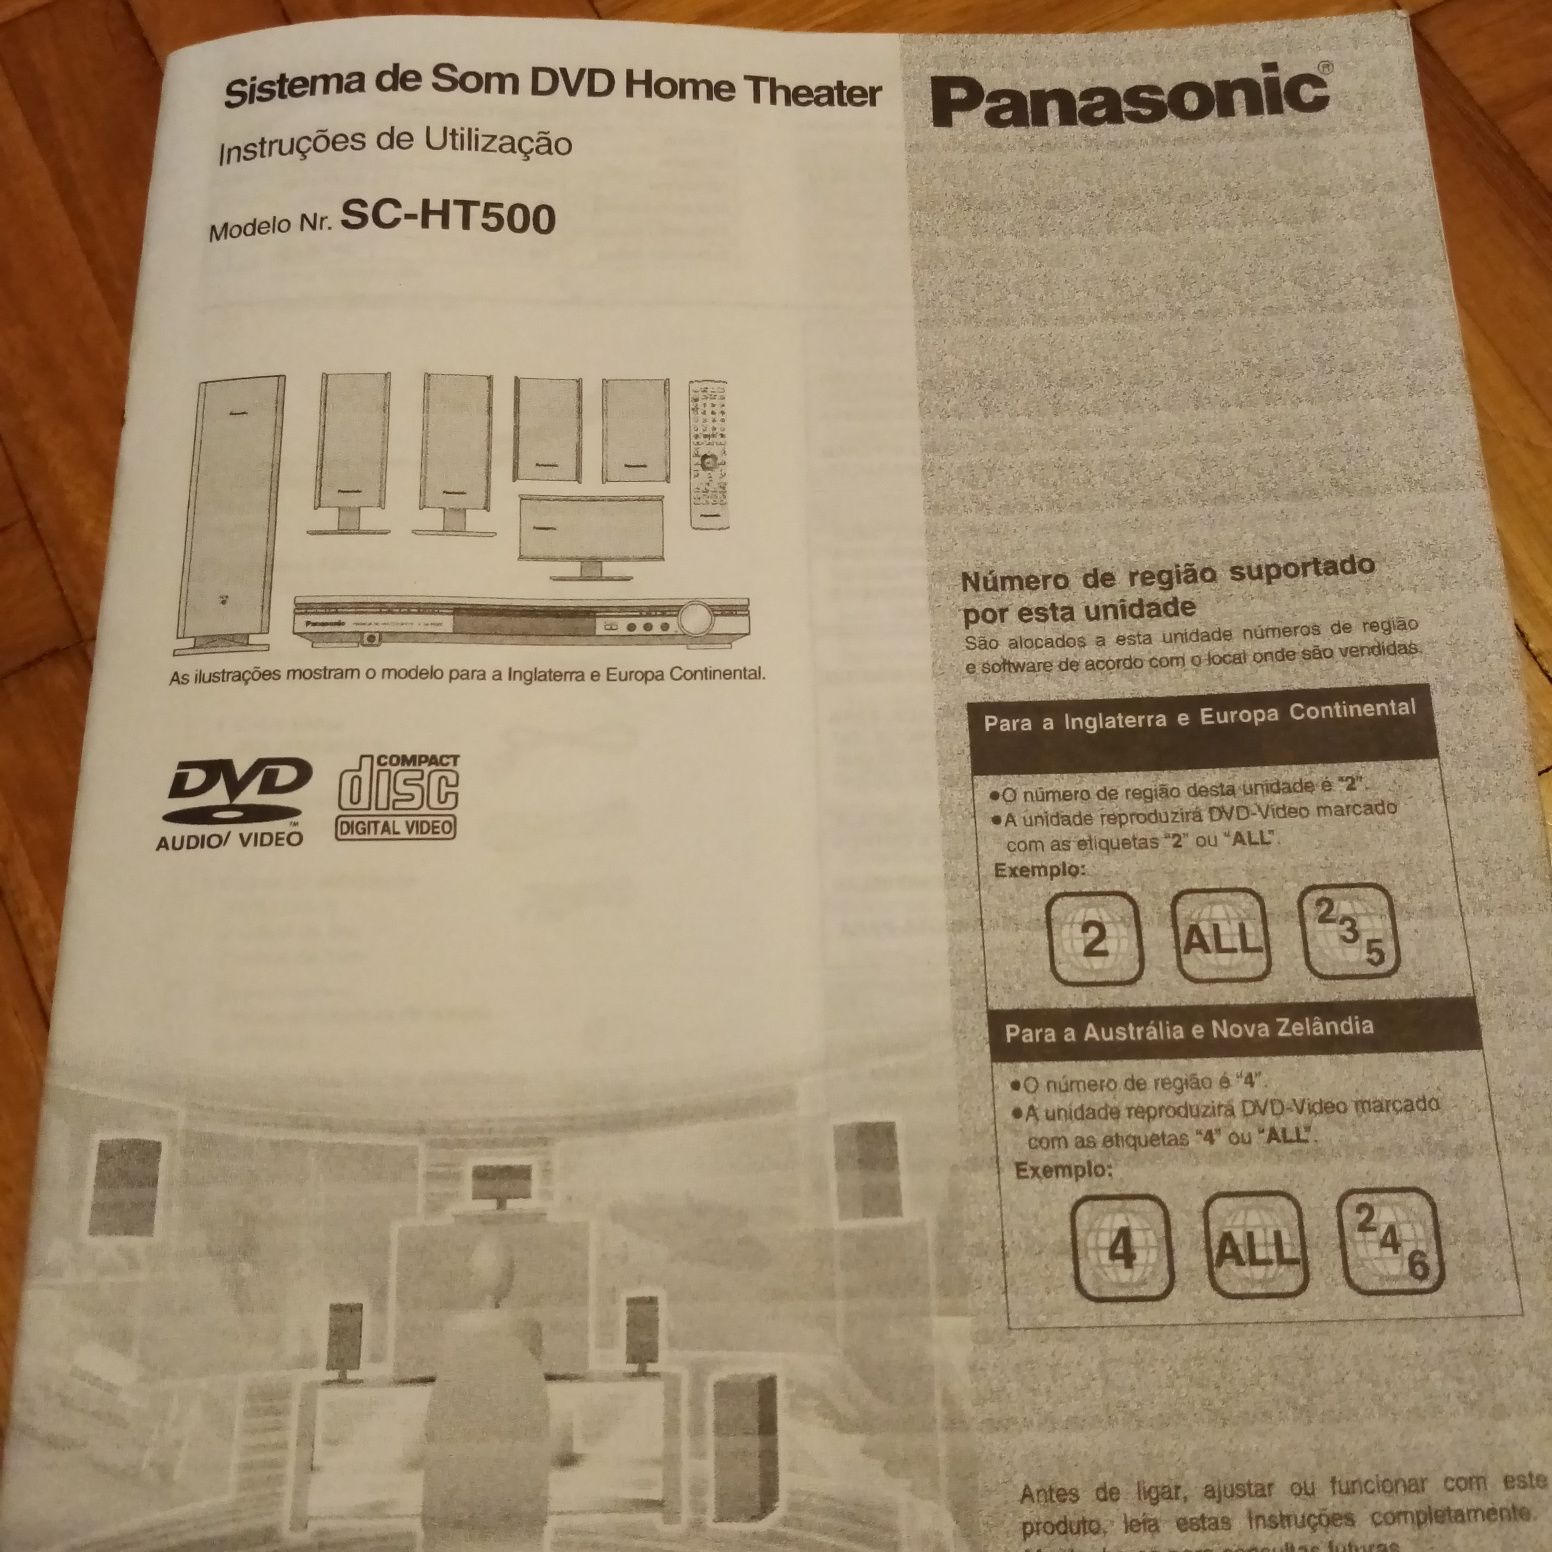 Sistema de Som DVD Home Theater modelo Sc - HT 500 Panasonic